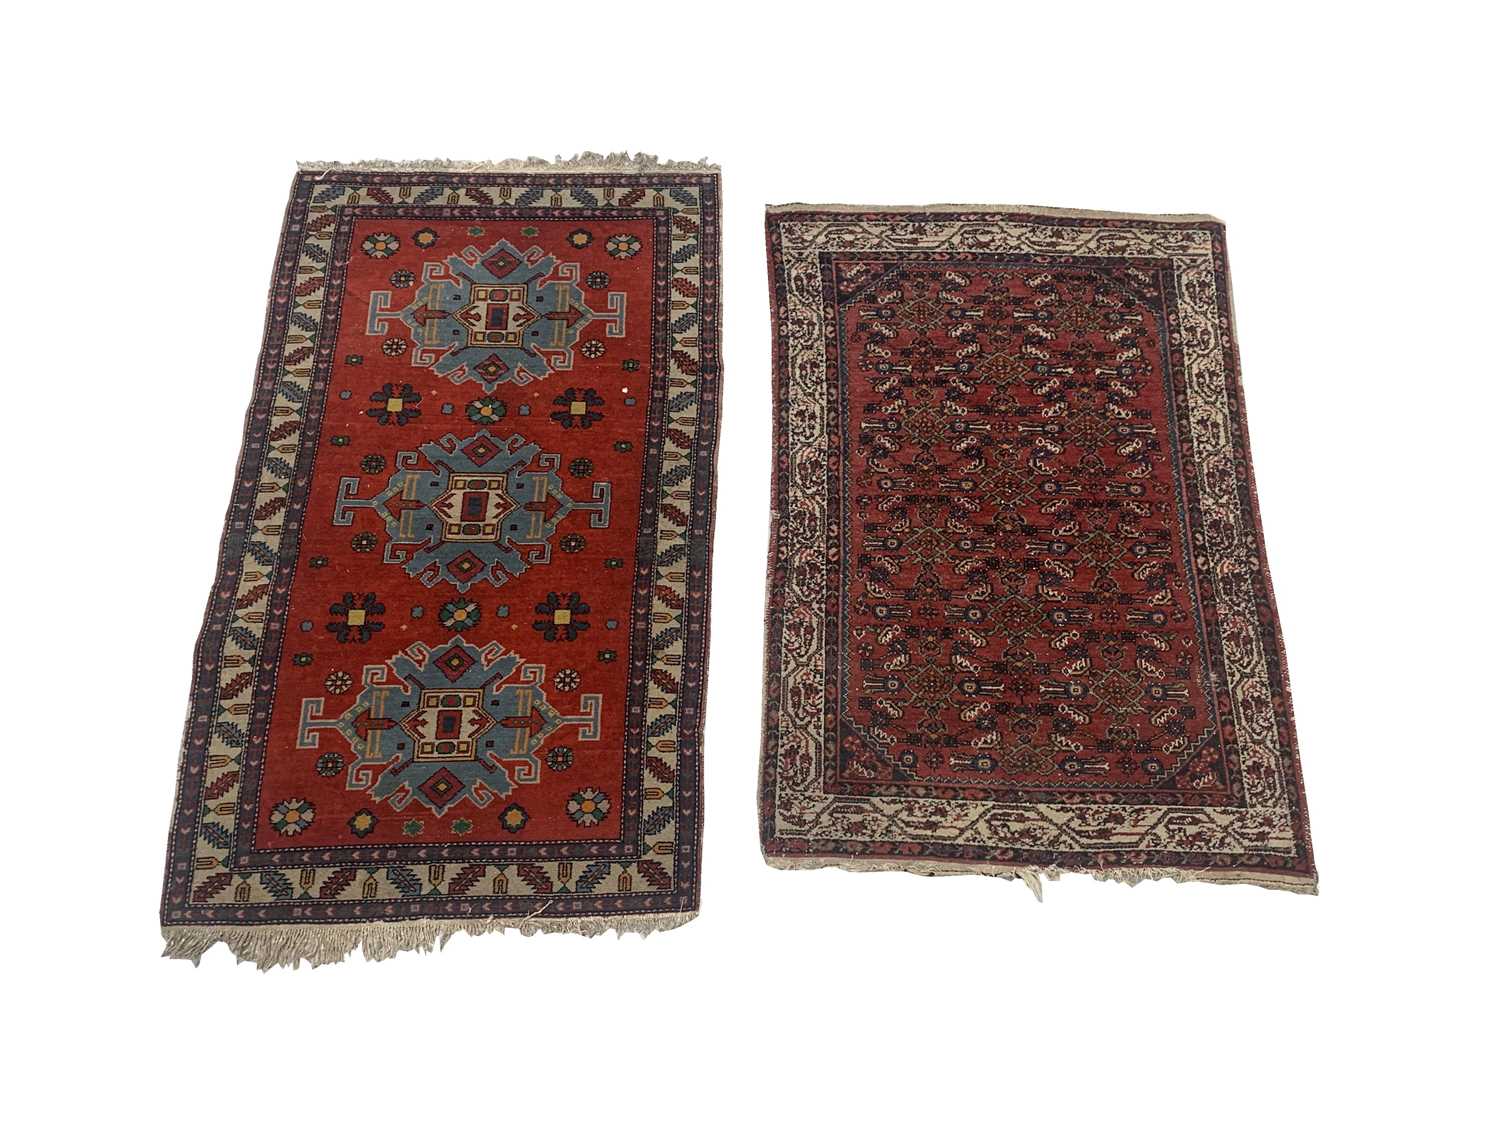 An Erivan rug, Armenia, Central Caucasus, 175 x 97.5cm and a Seraband rug, North West Persian, 155 x